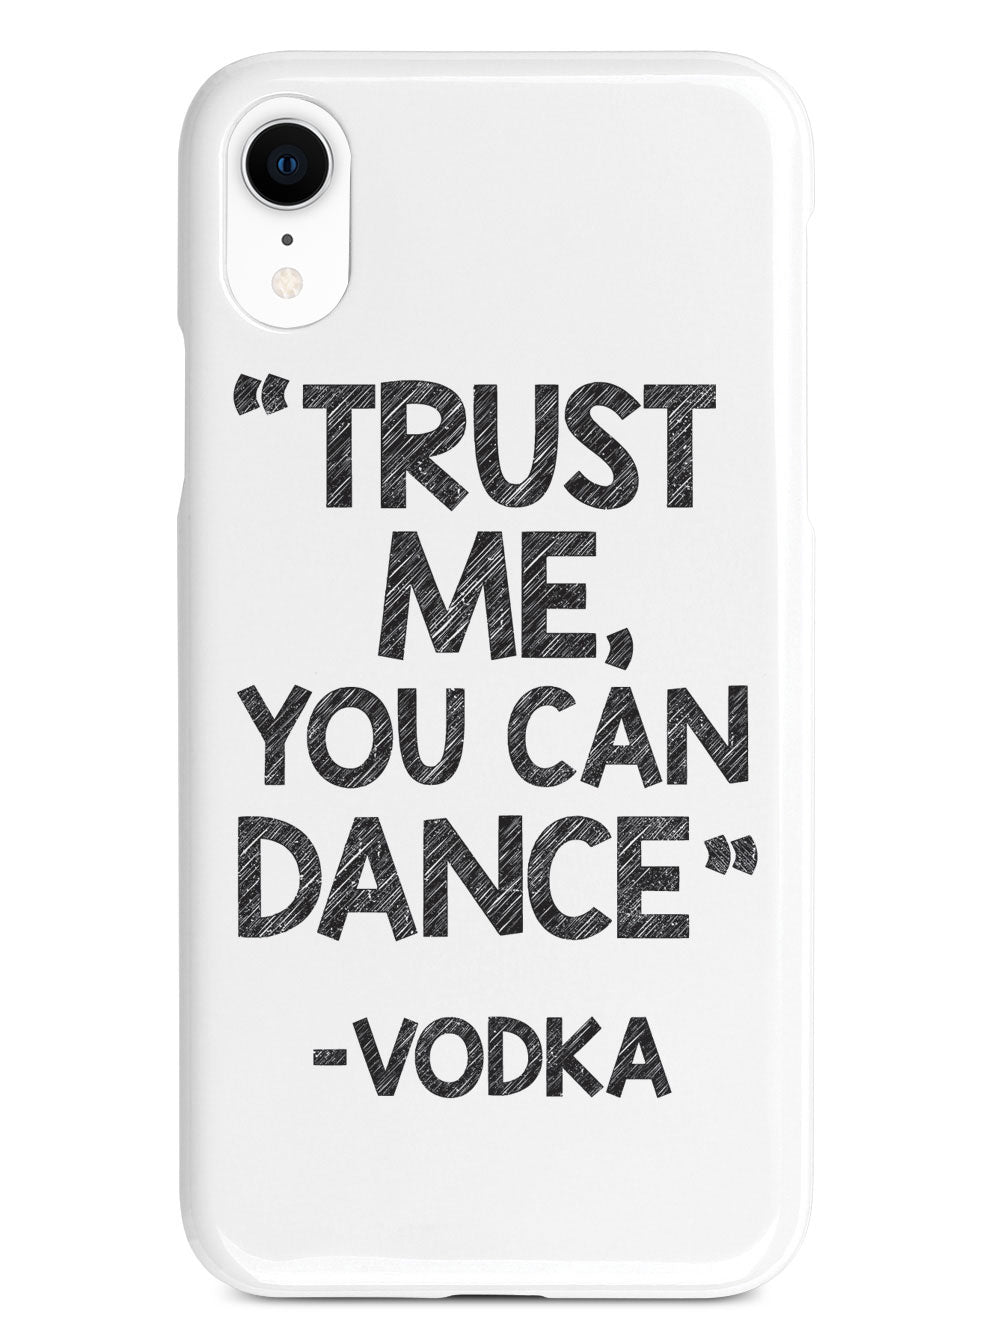 Trust Me, You Can Dance - Vodka Case